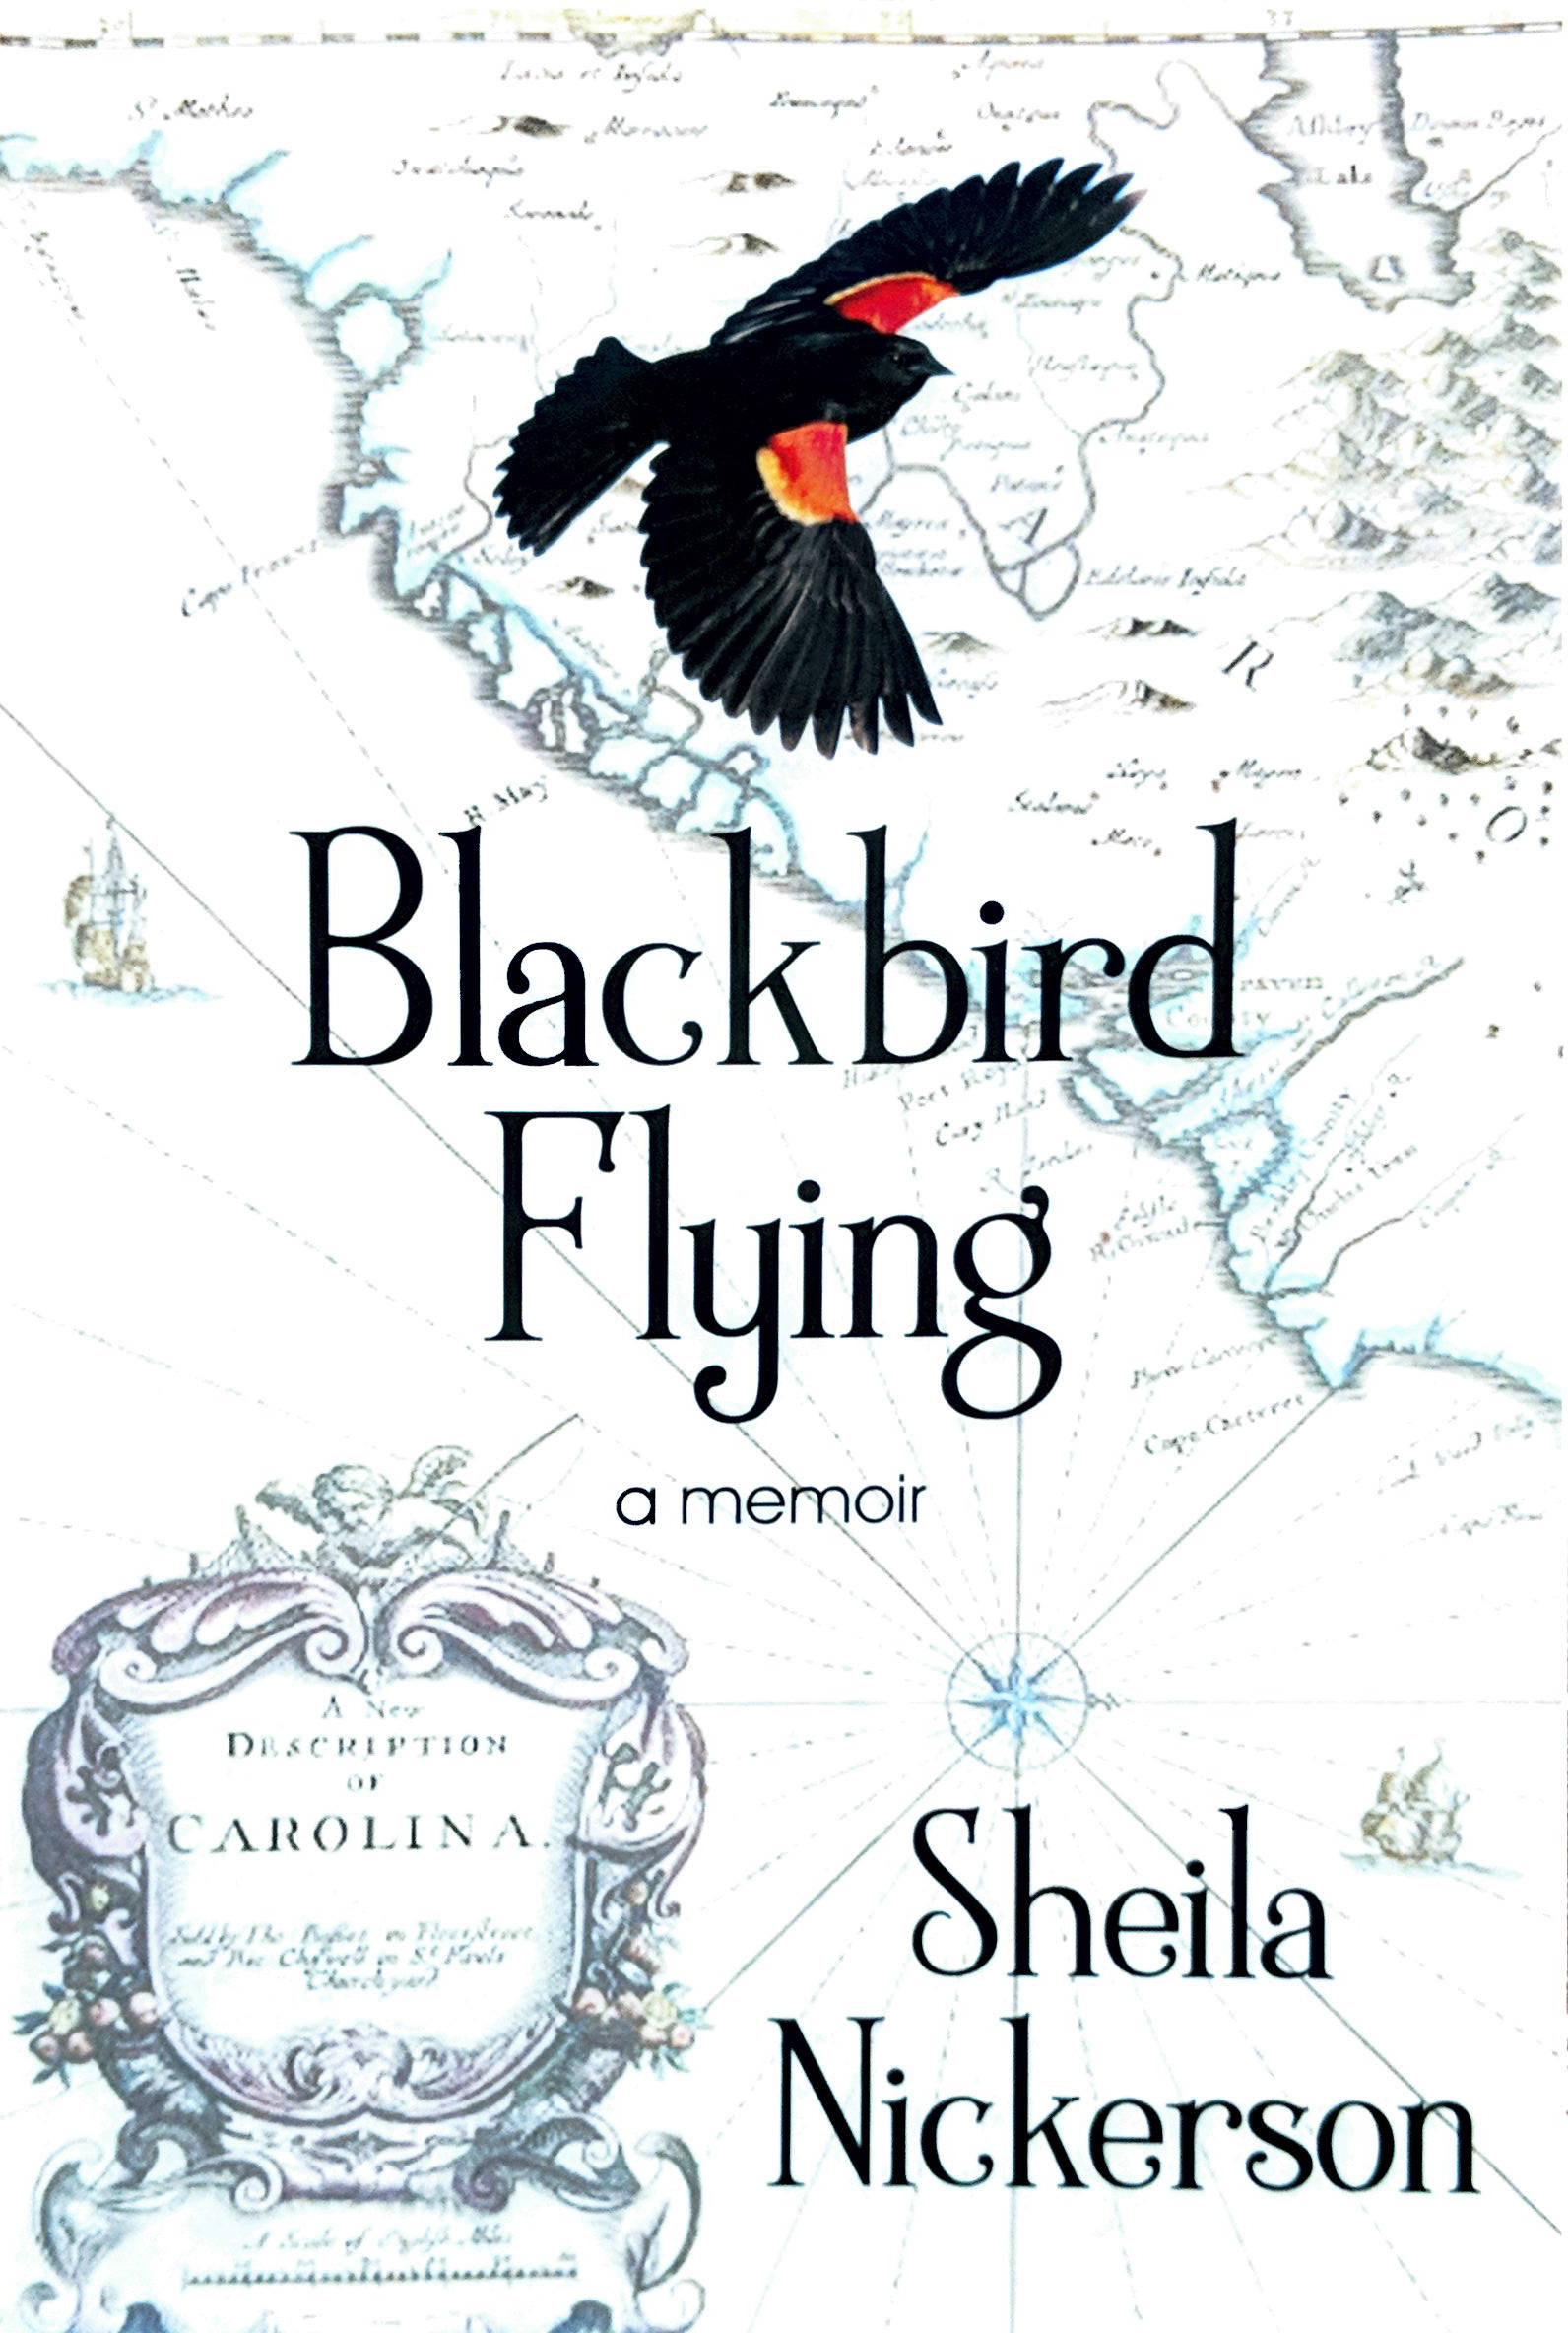 Birds, learning and life after death: Former Alaska poet laureate talks about her memoir